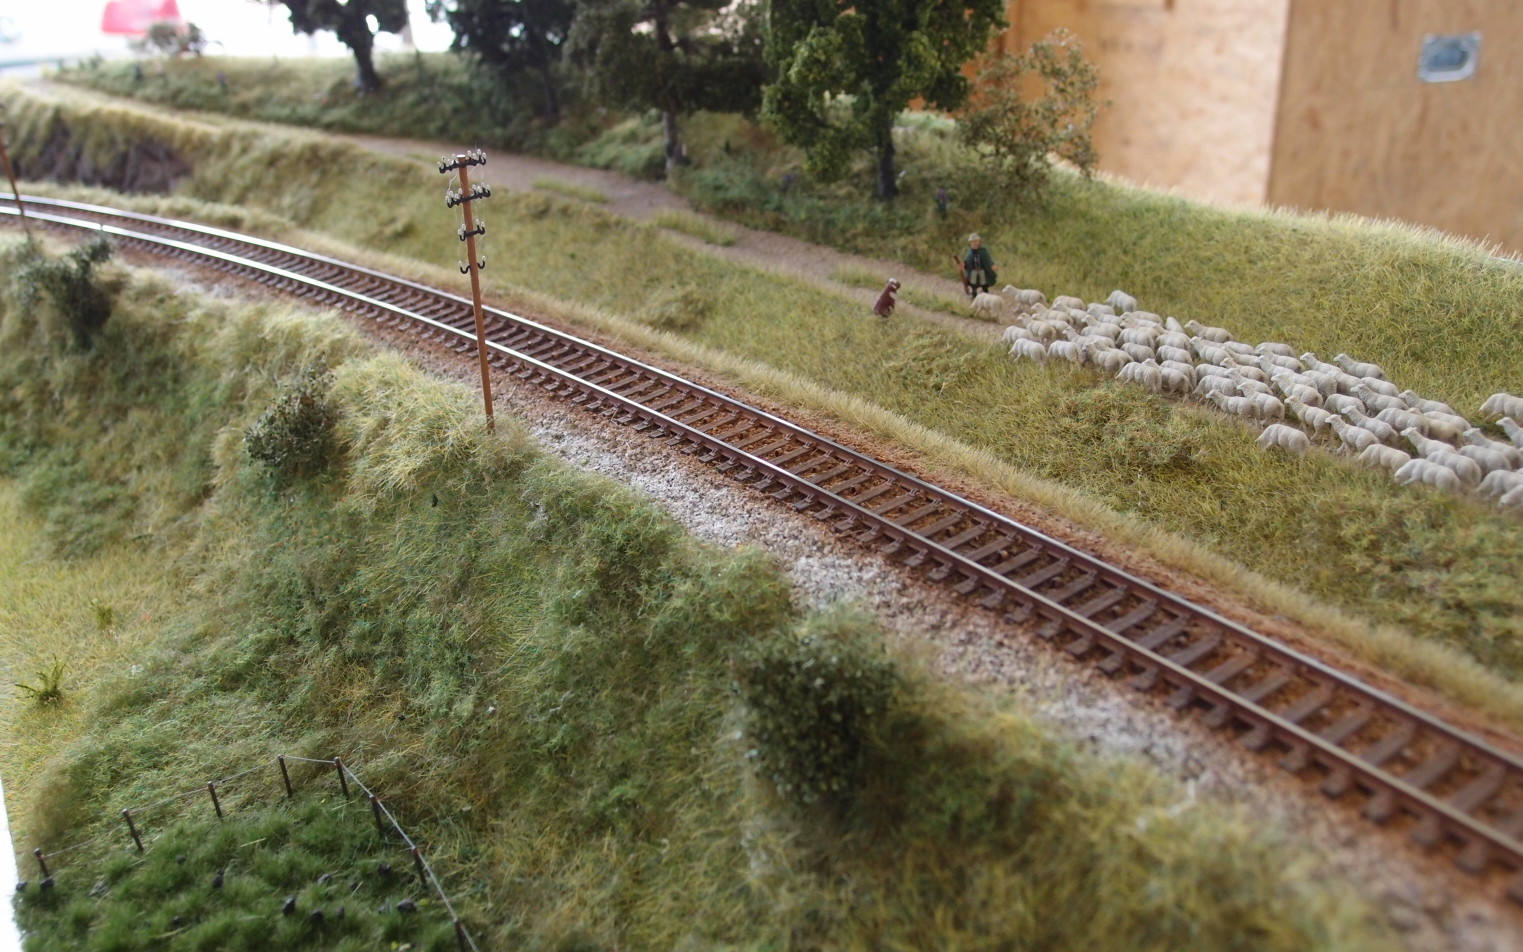 Modell-Eisenbahn-Freunde Kinzigtal